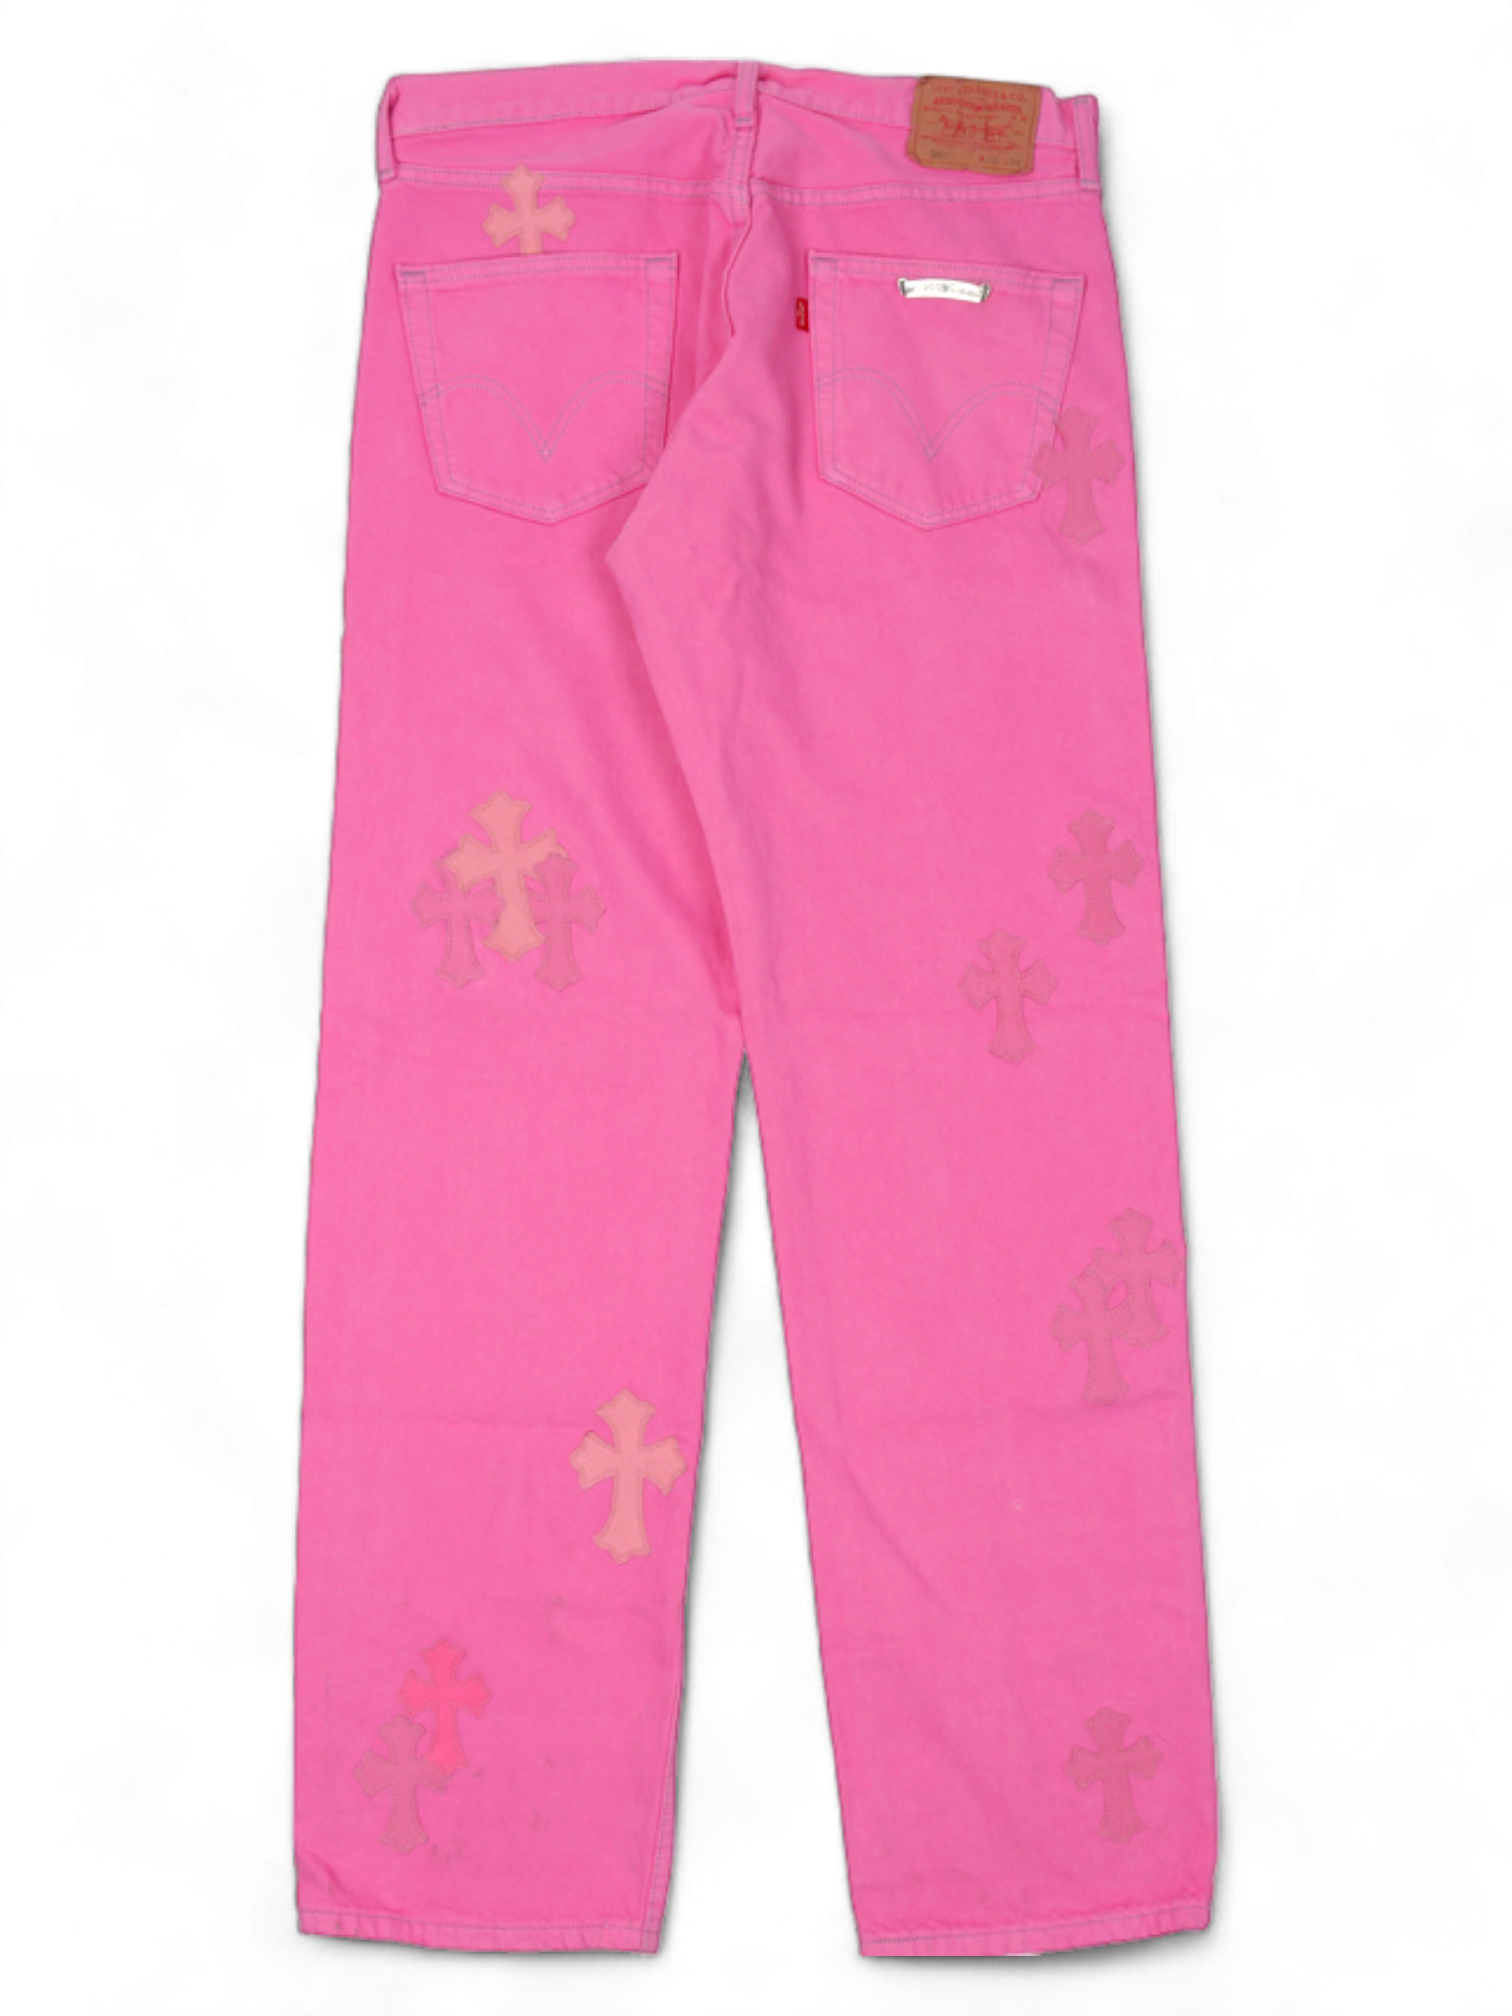 Chrome Hearts Pink Cross Patch Levi’s Denim Jeans